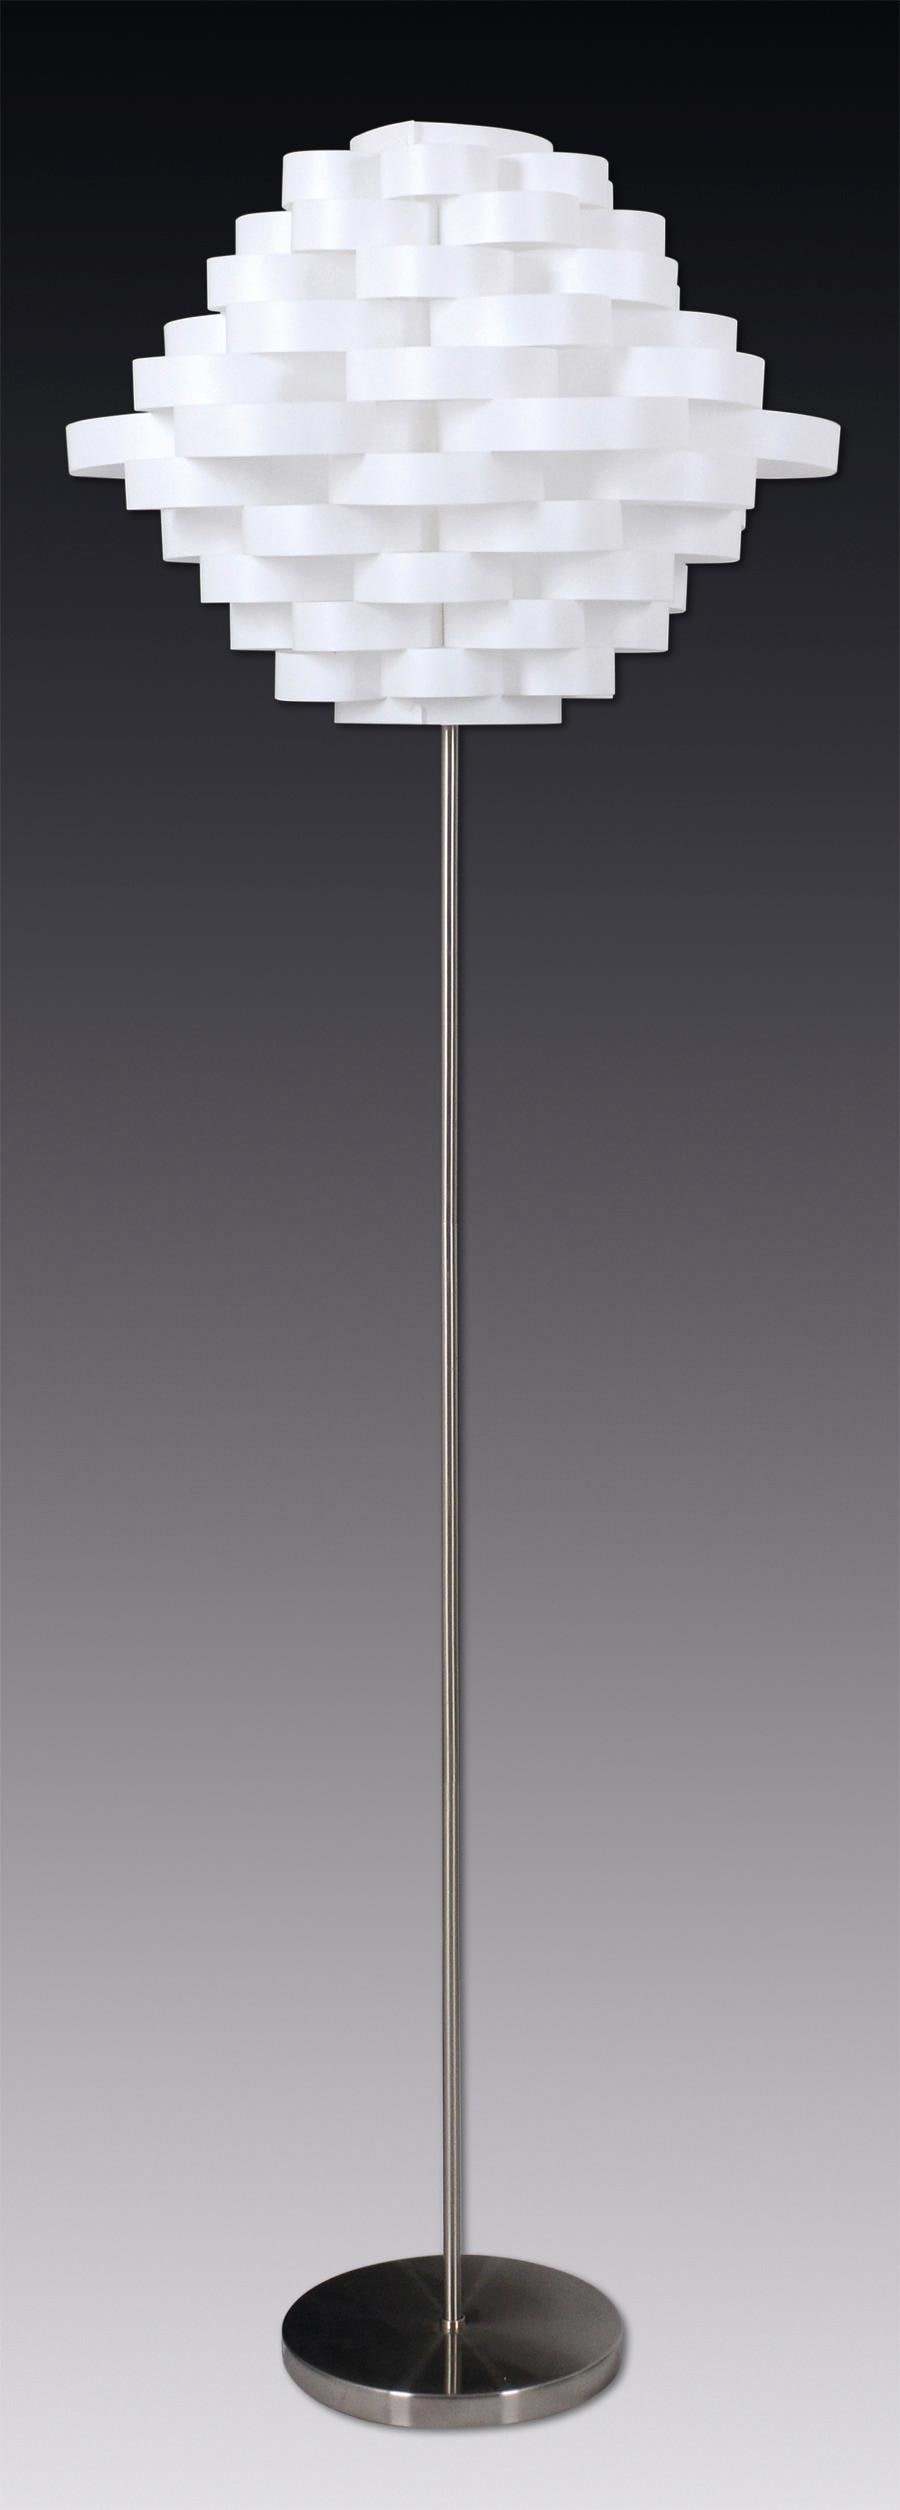 Line«, bei h: Kunststoff/Metall, 55cm weiß/nickel, flammig-flammig, 1 online E27 150cm, OTTO d: Stehlampe »White näve max. 40W,